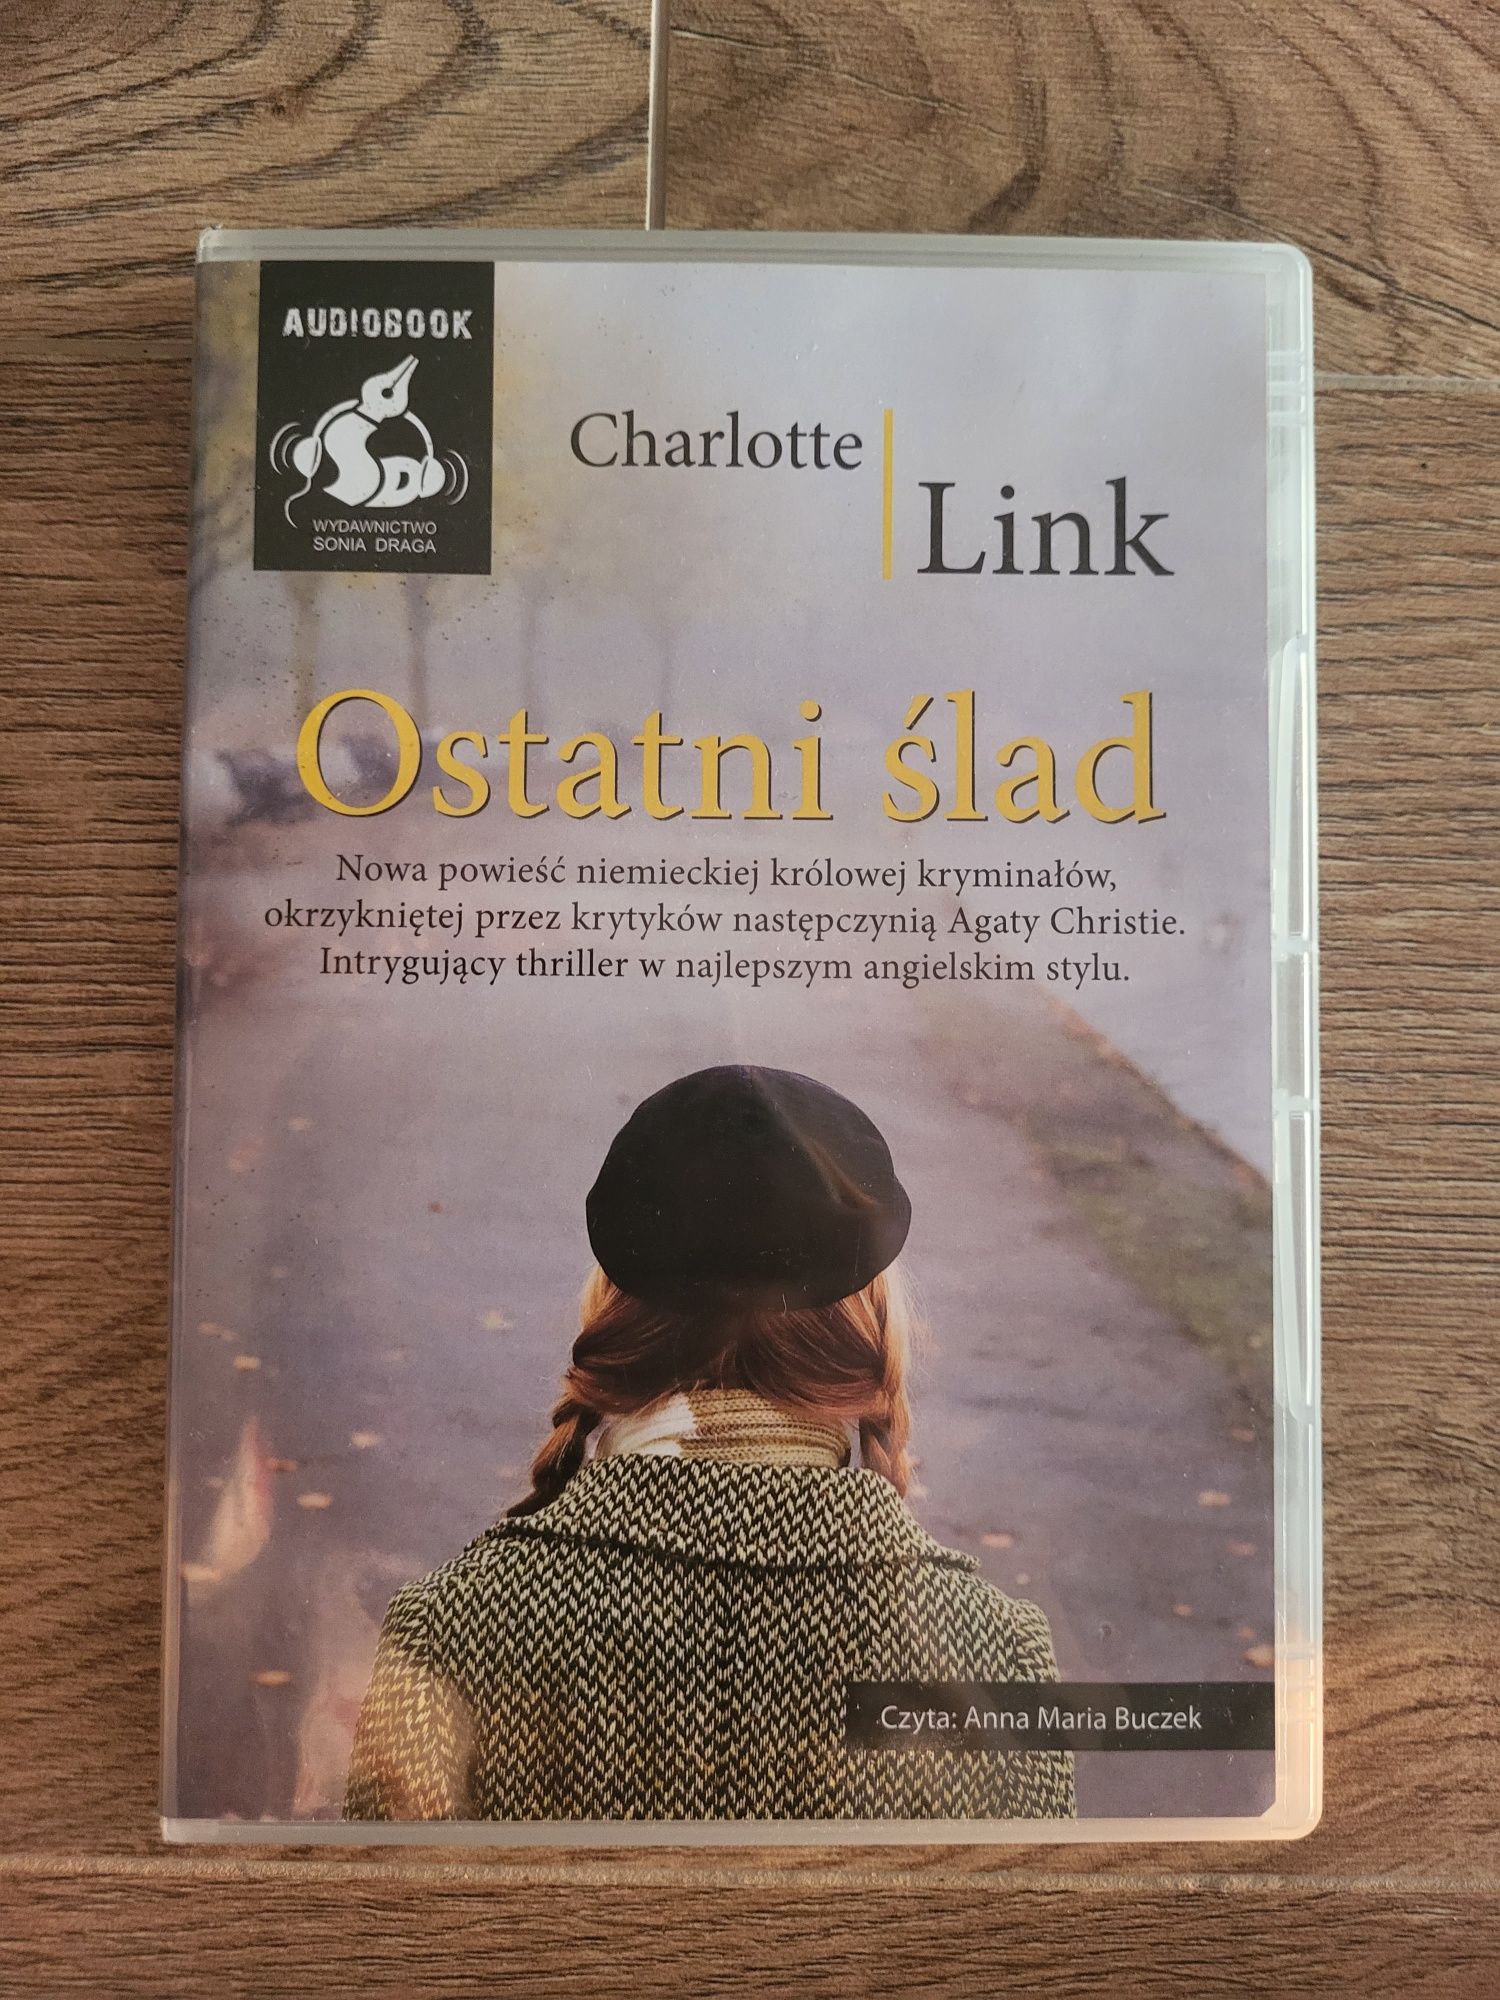 Audiobook, Charlotte Link "Ostatni ślad"